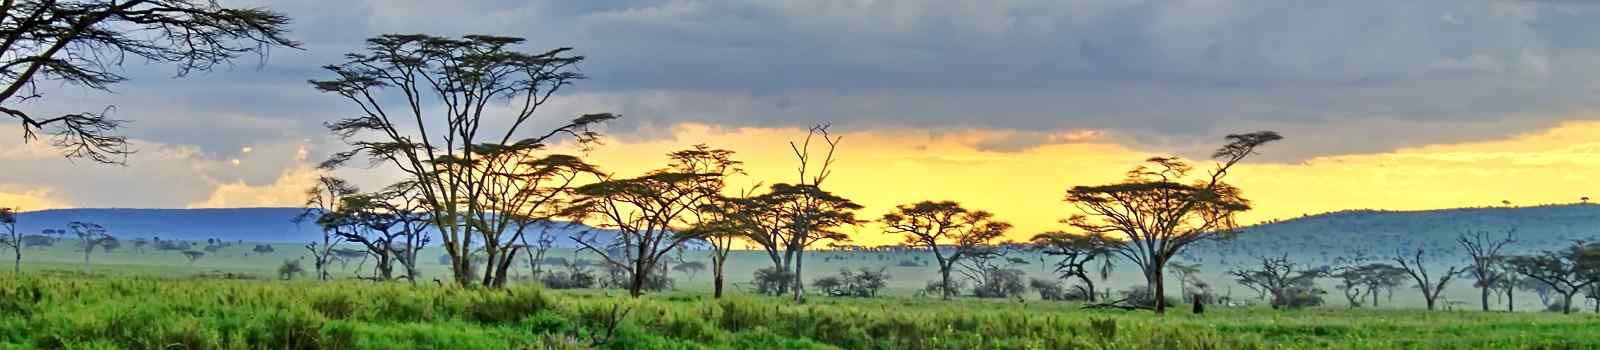  Acacia-Baeume auf der Ebene bei Sonnenuntergang im Serengeti-Nationalpark  Tansania shutterstock 662282533